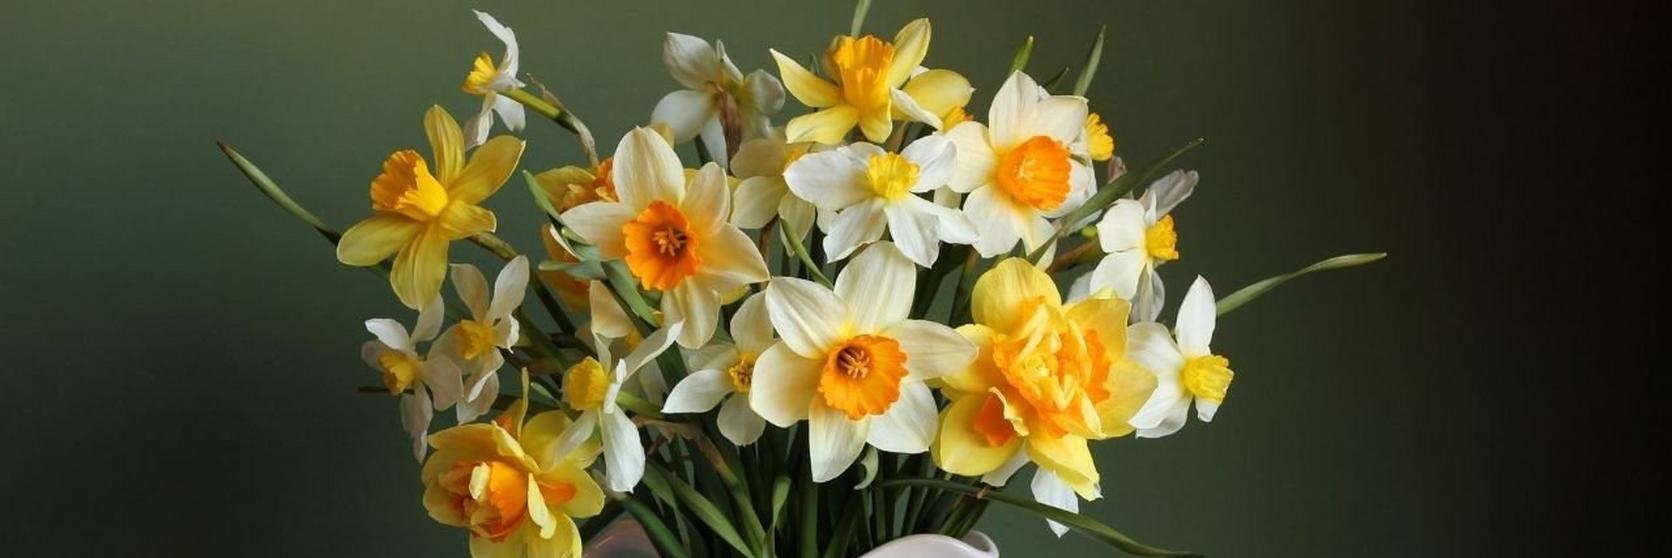 jug_of_daffodils